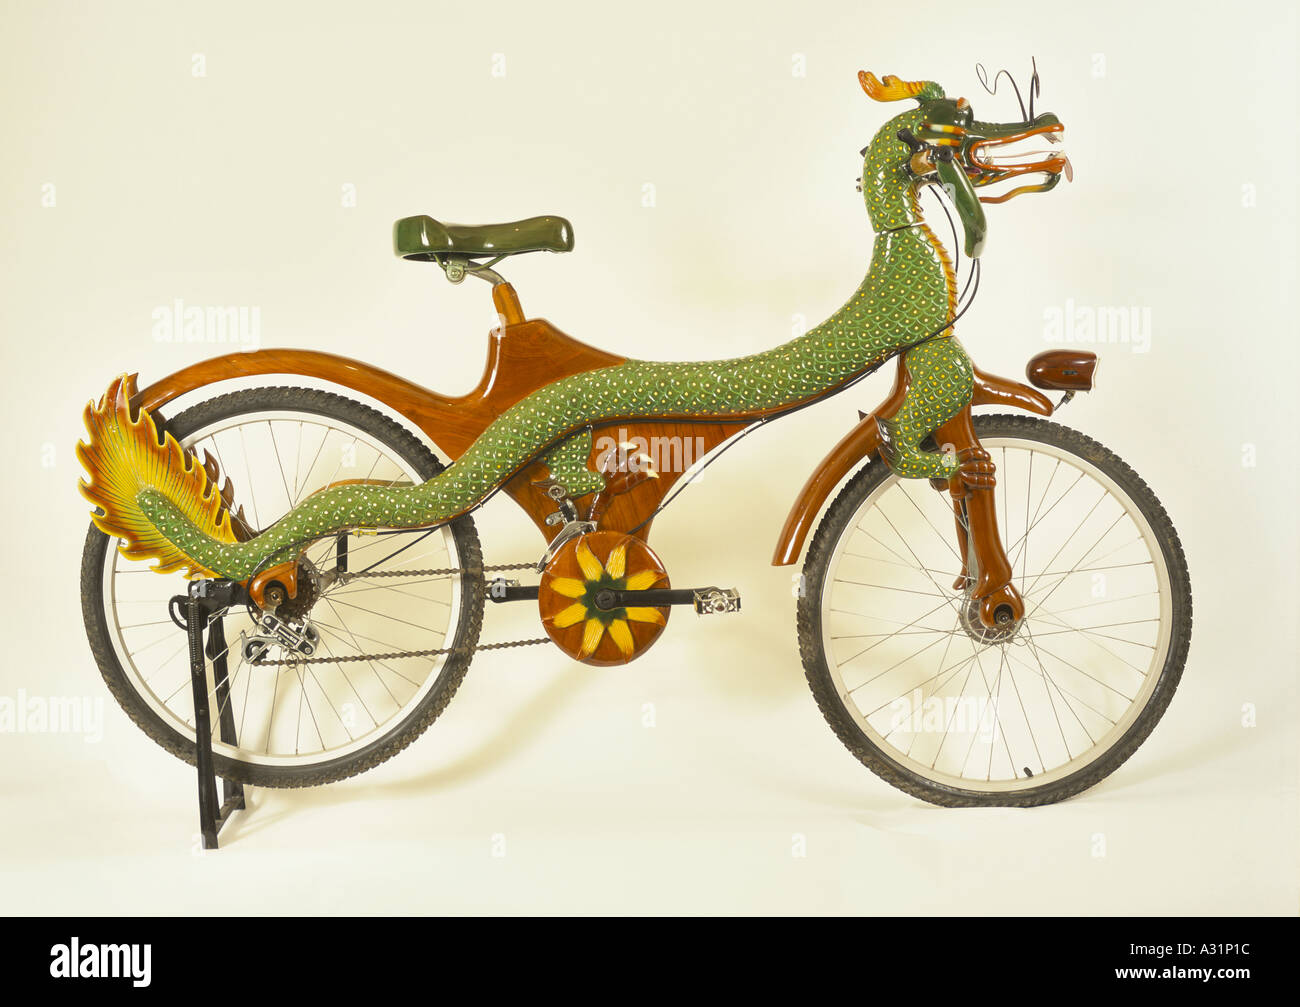 wooden bike co dragon bike company based in london Stock Photo - Alamy